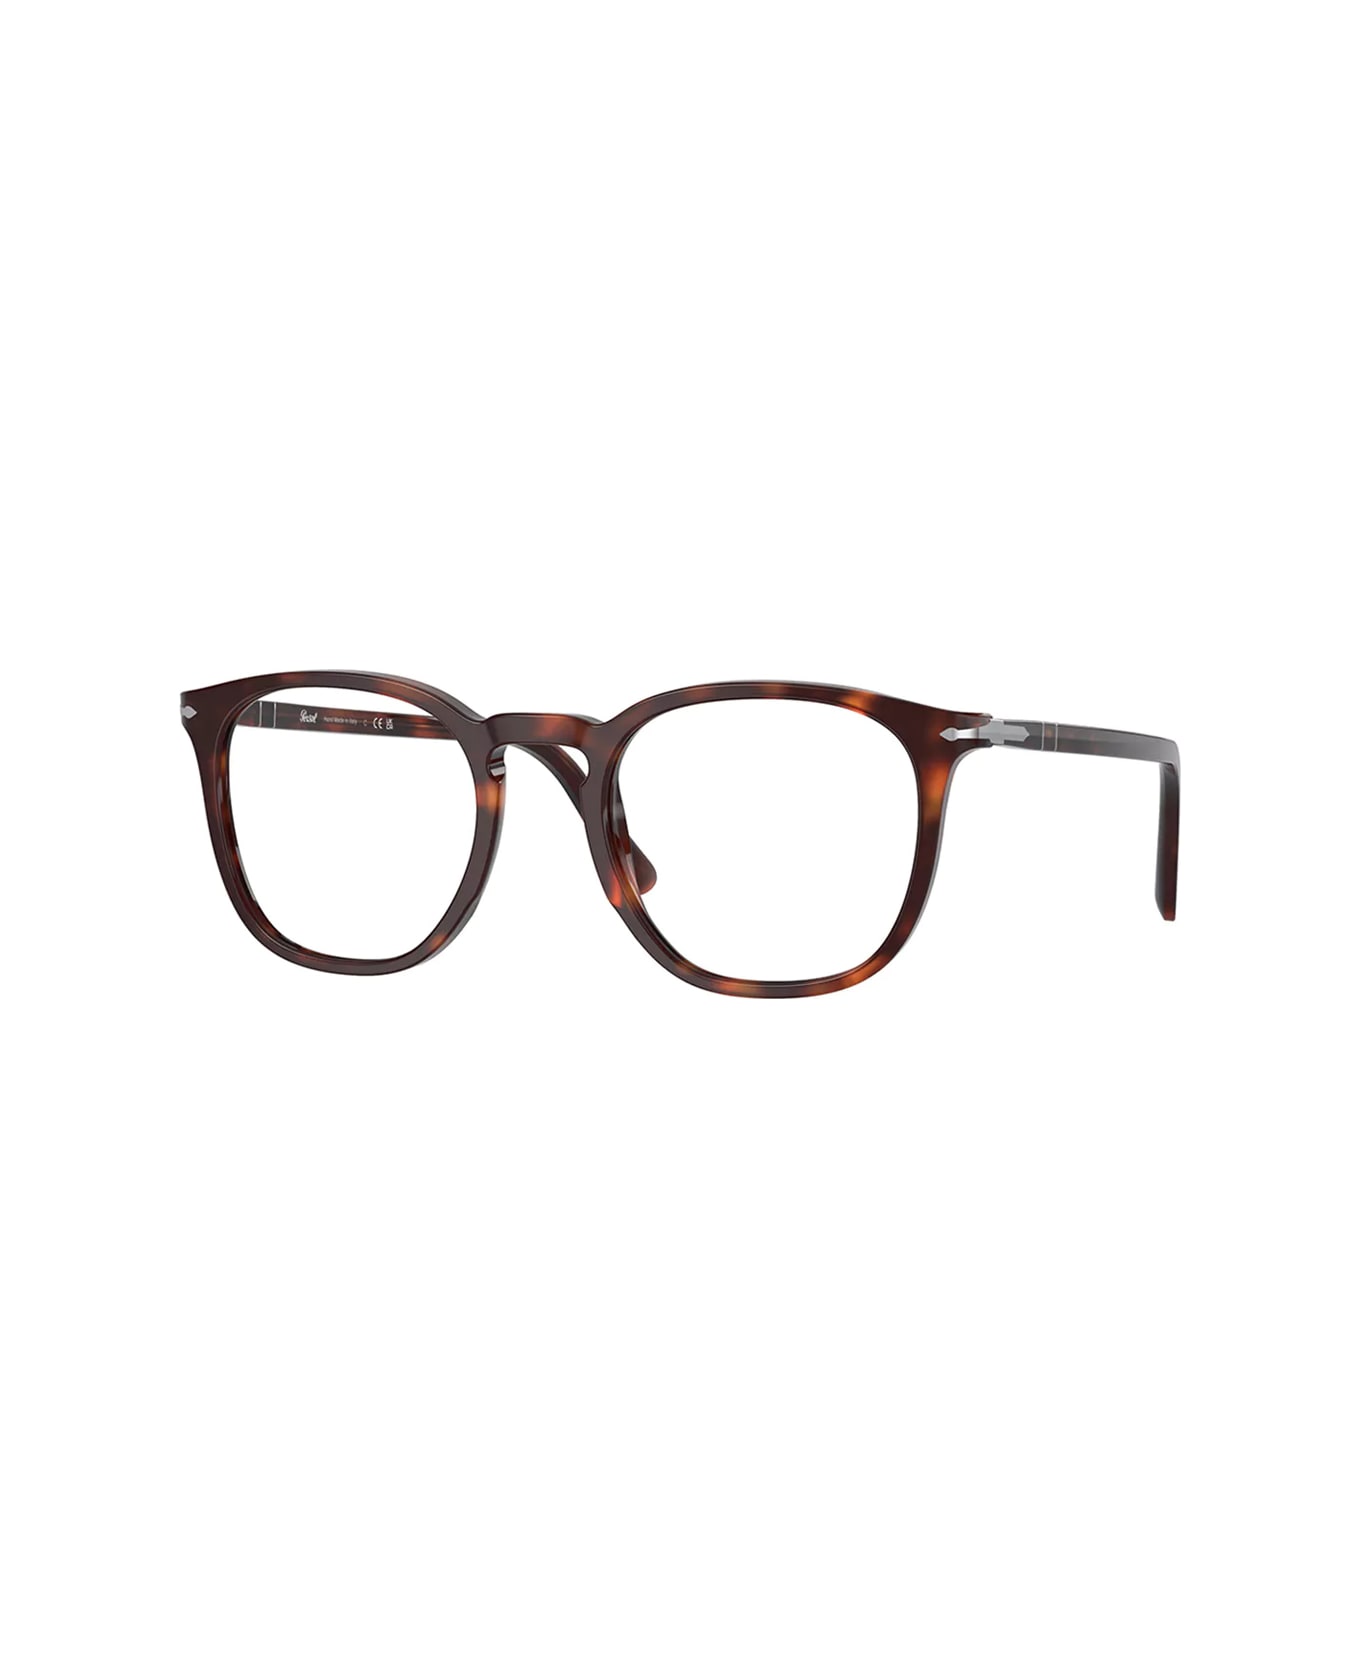 Persol Po3318v 24 Glasses - Marrone アイウェア